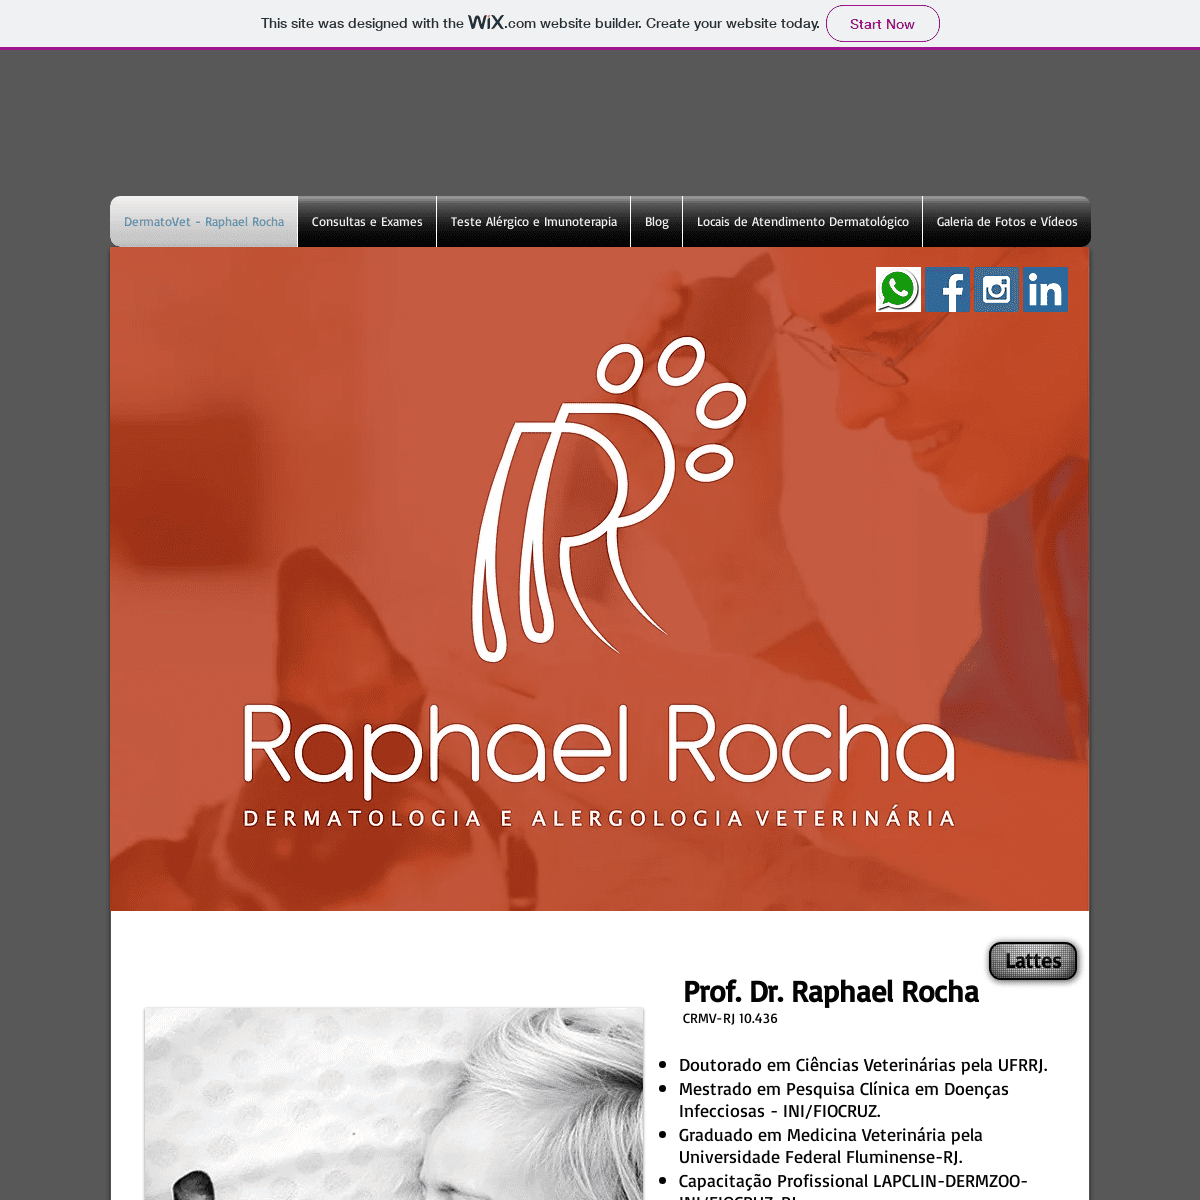 A complete backup of dermatovetraphaelrocha.com